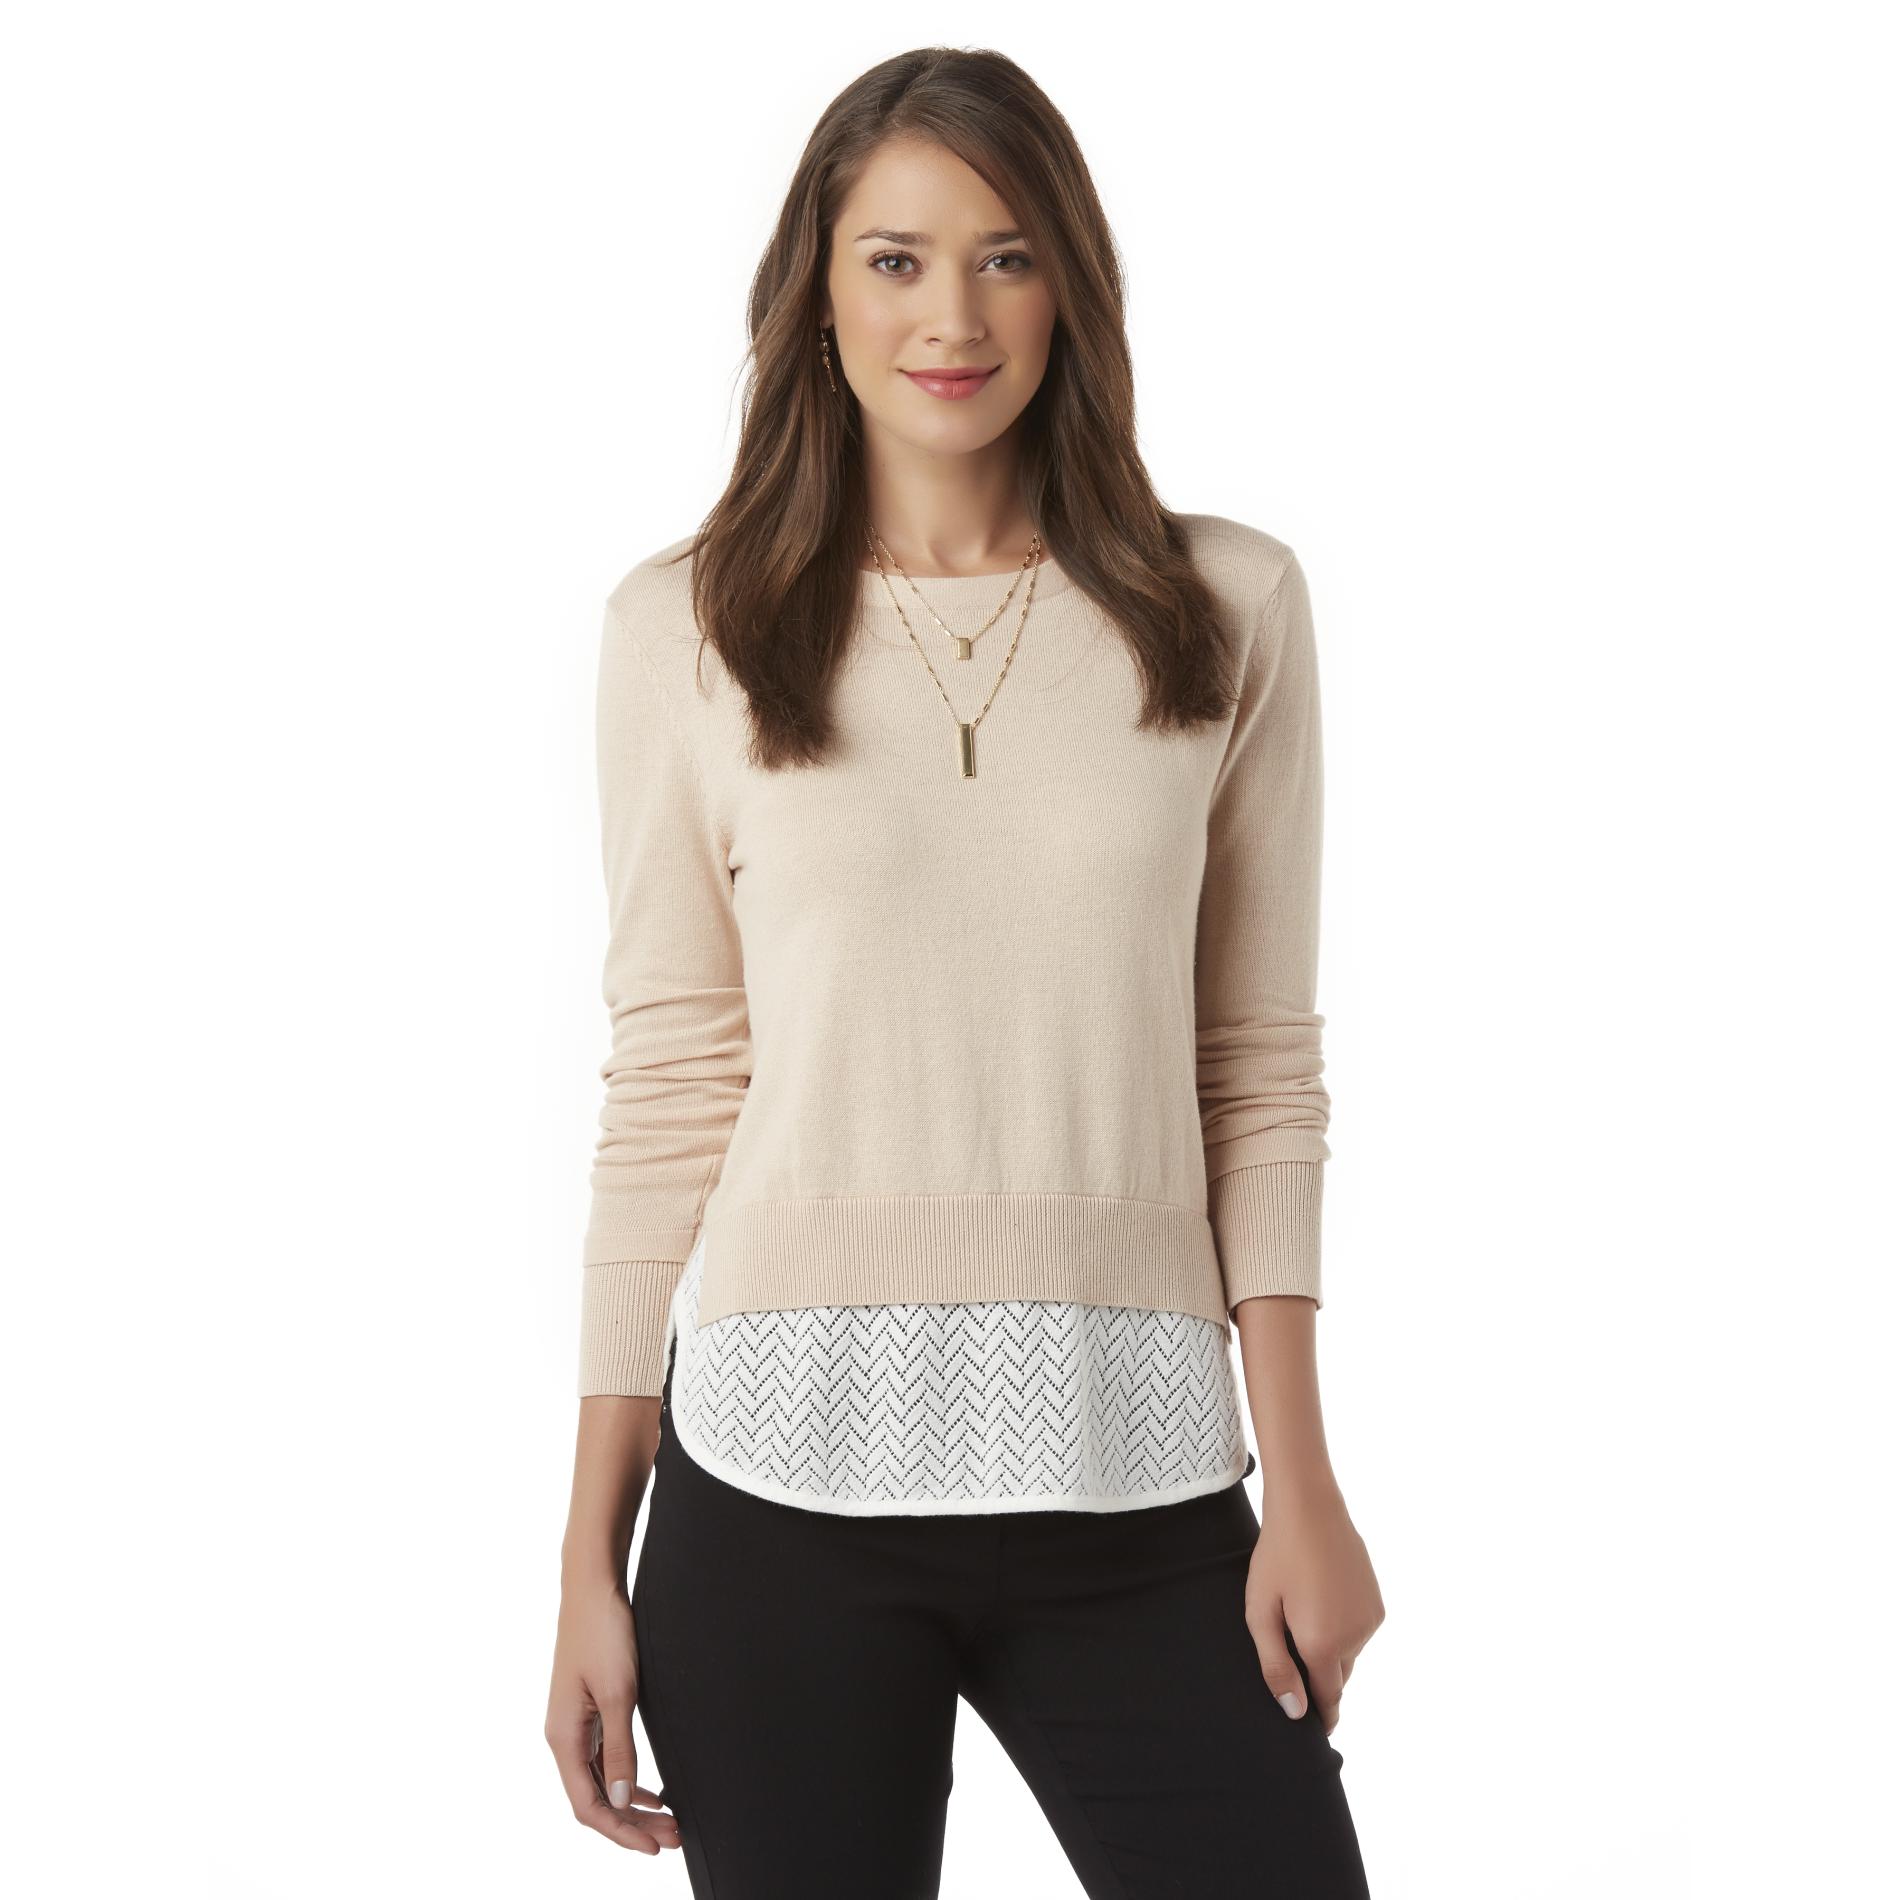 Metaphor Women's Layered-Look Pointelle Sweater